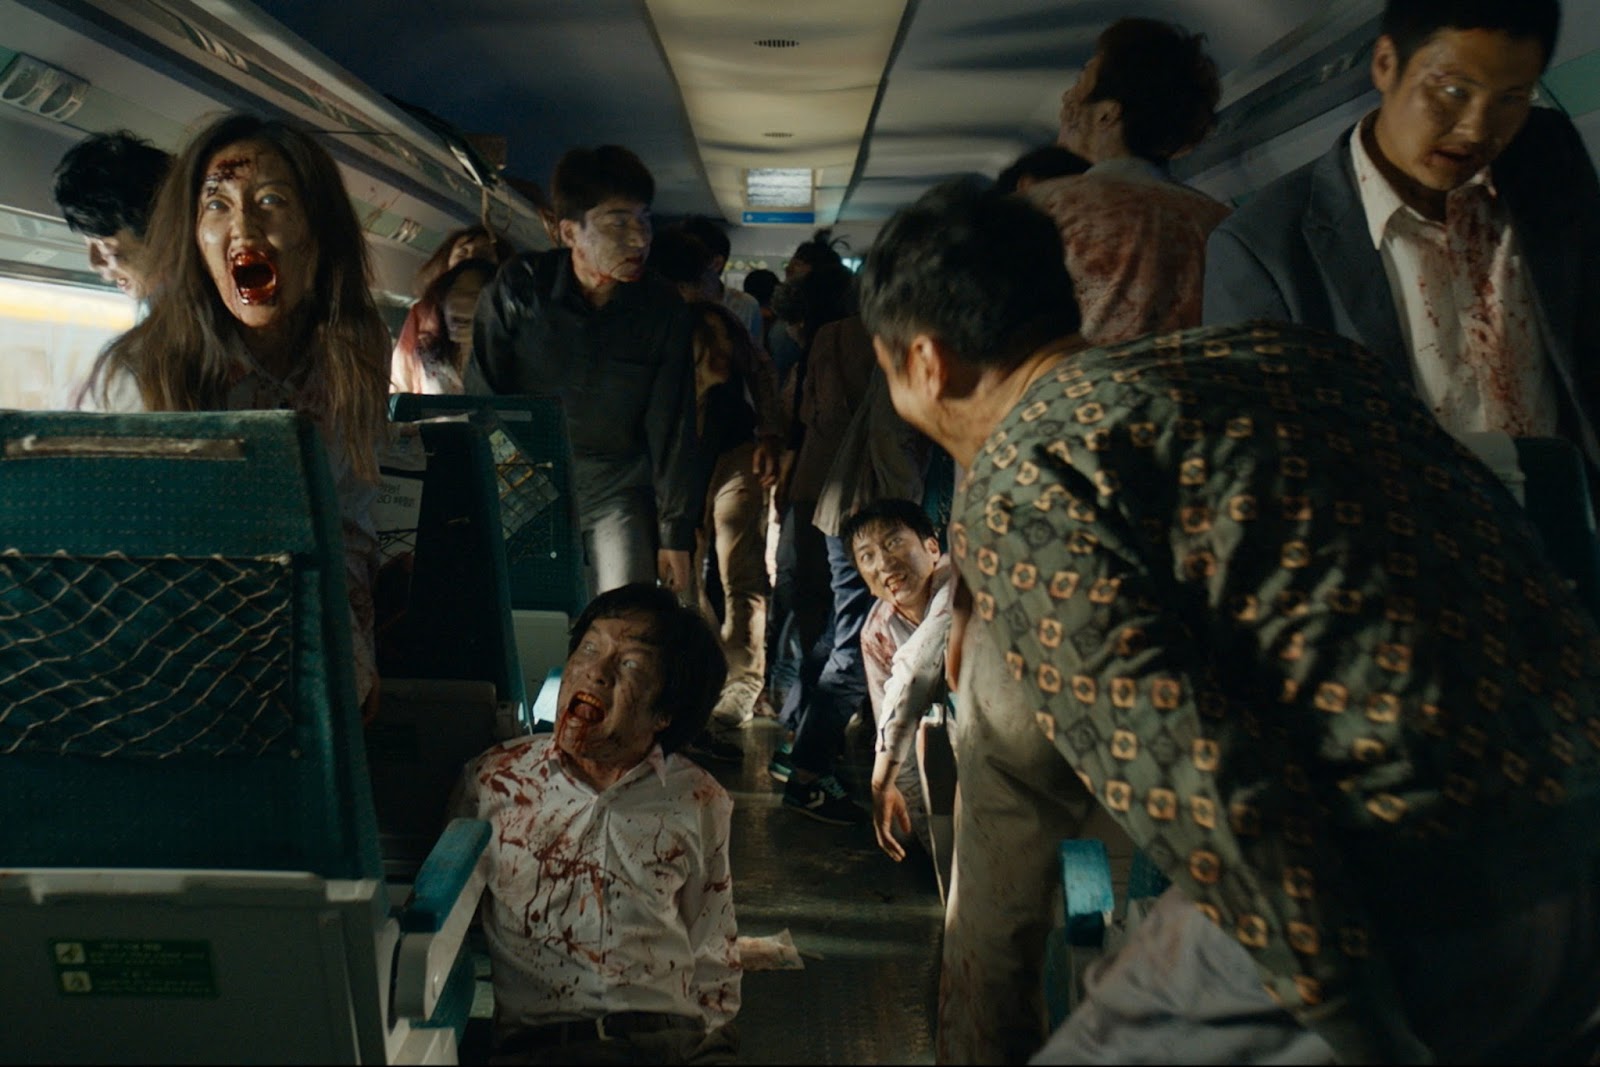 1337x Train to Busan 2 Watch Online Full Movie. 